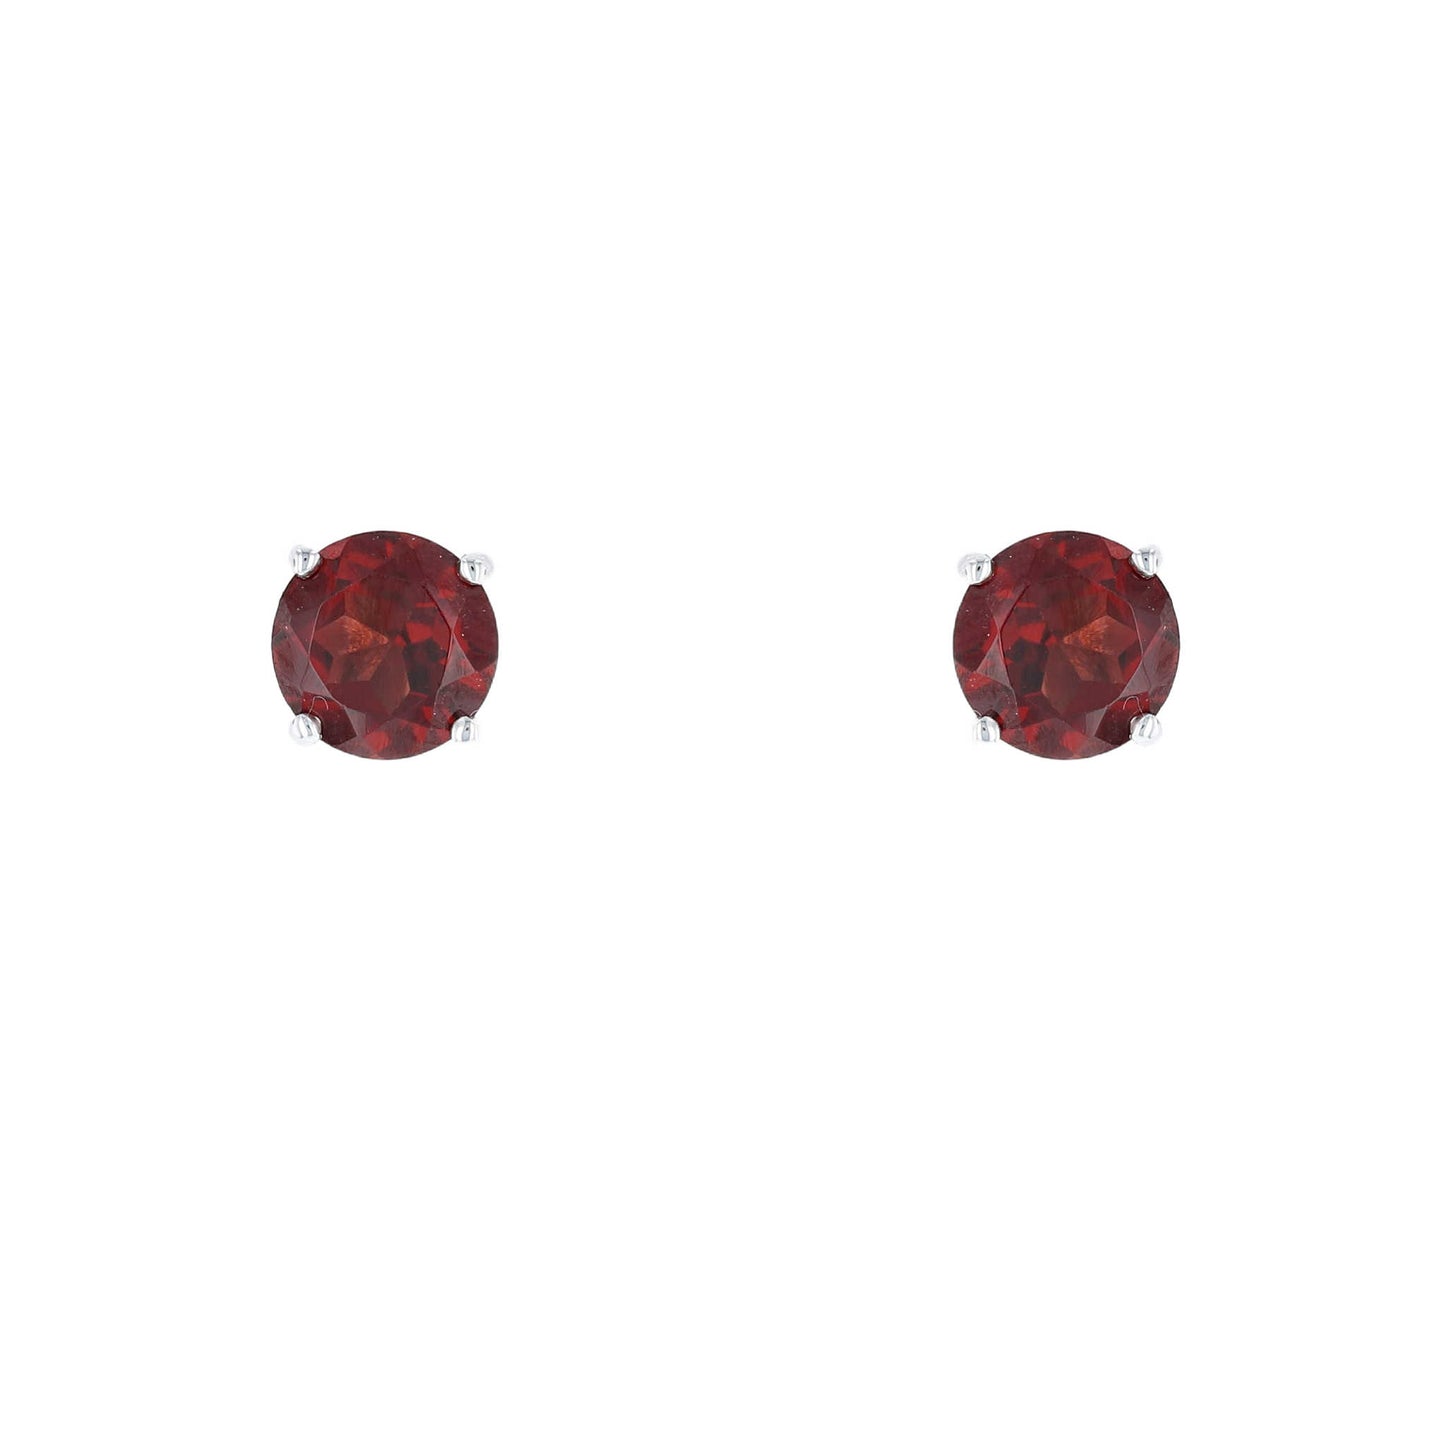 Round 5 mm Garnet Stud Earrings